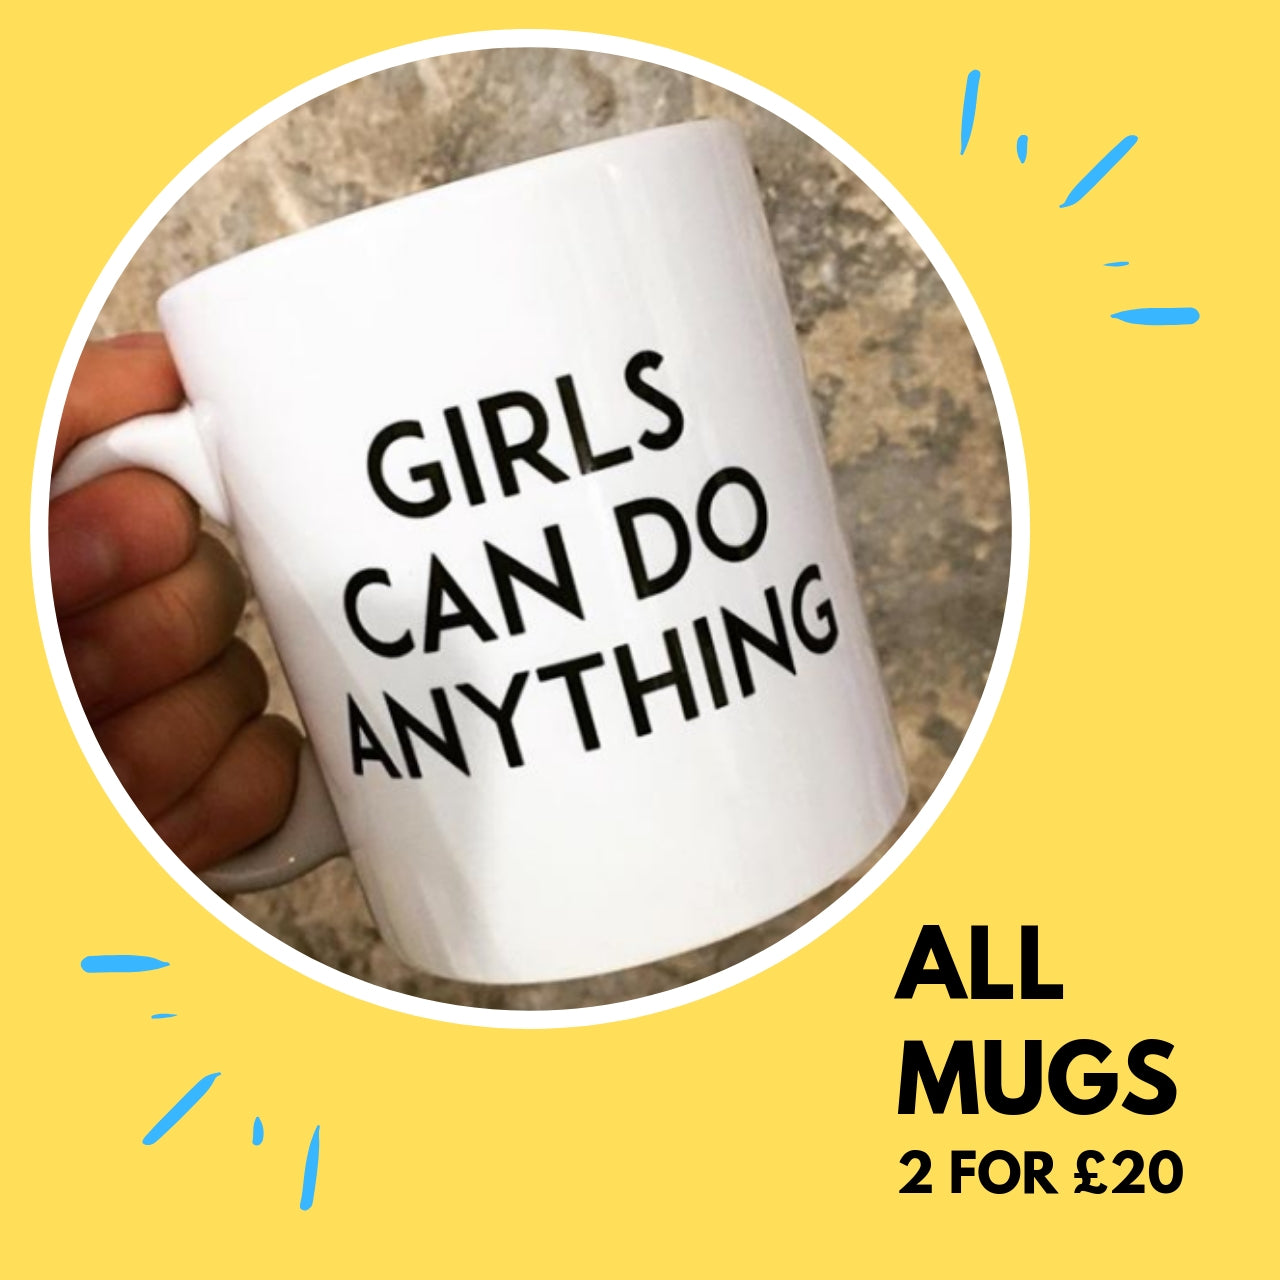 2 mugs for £20 at Braw Wee Emporium